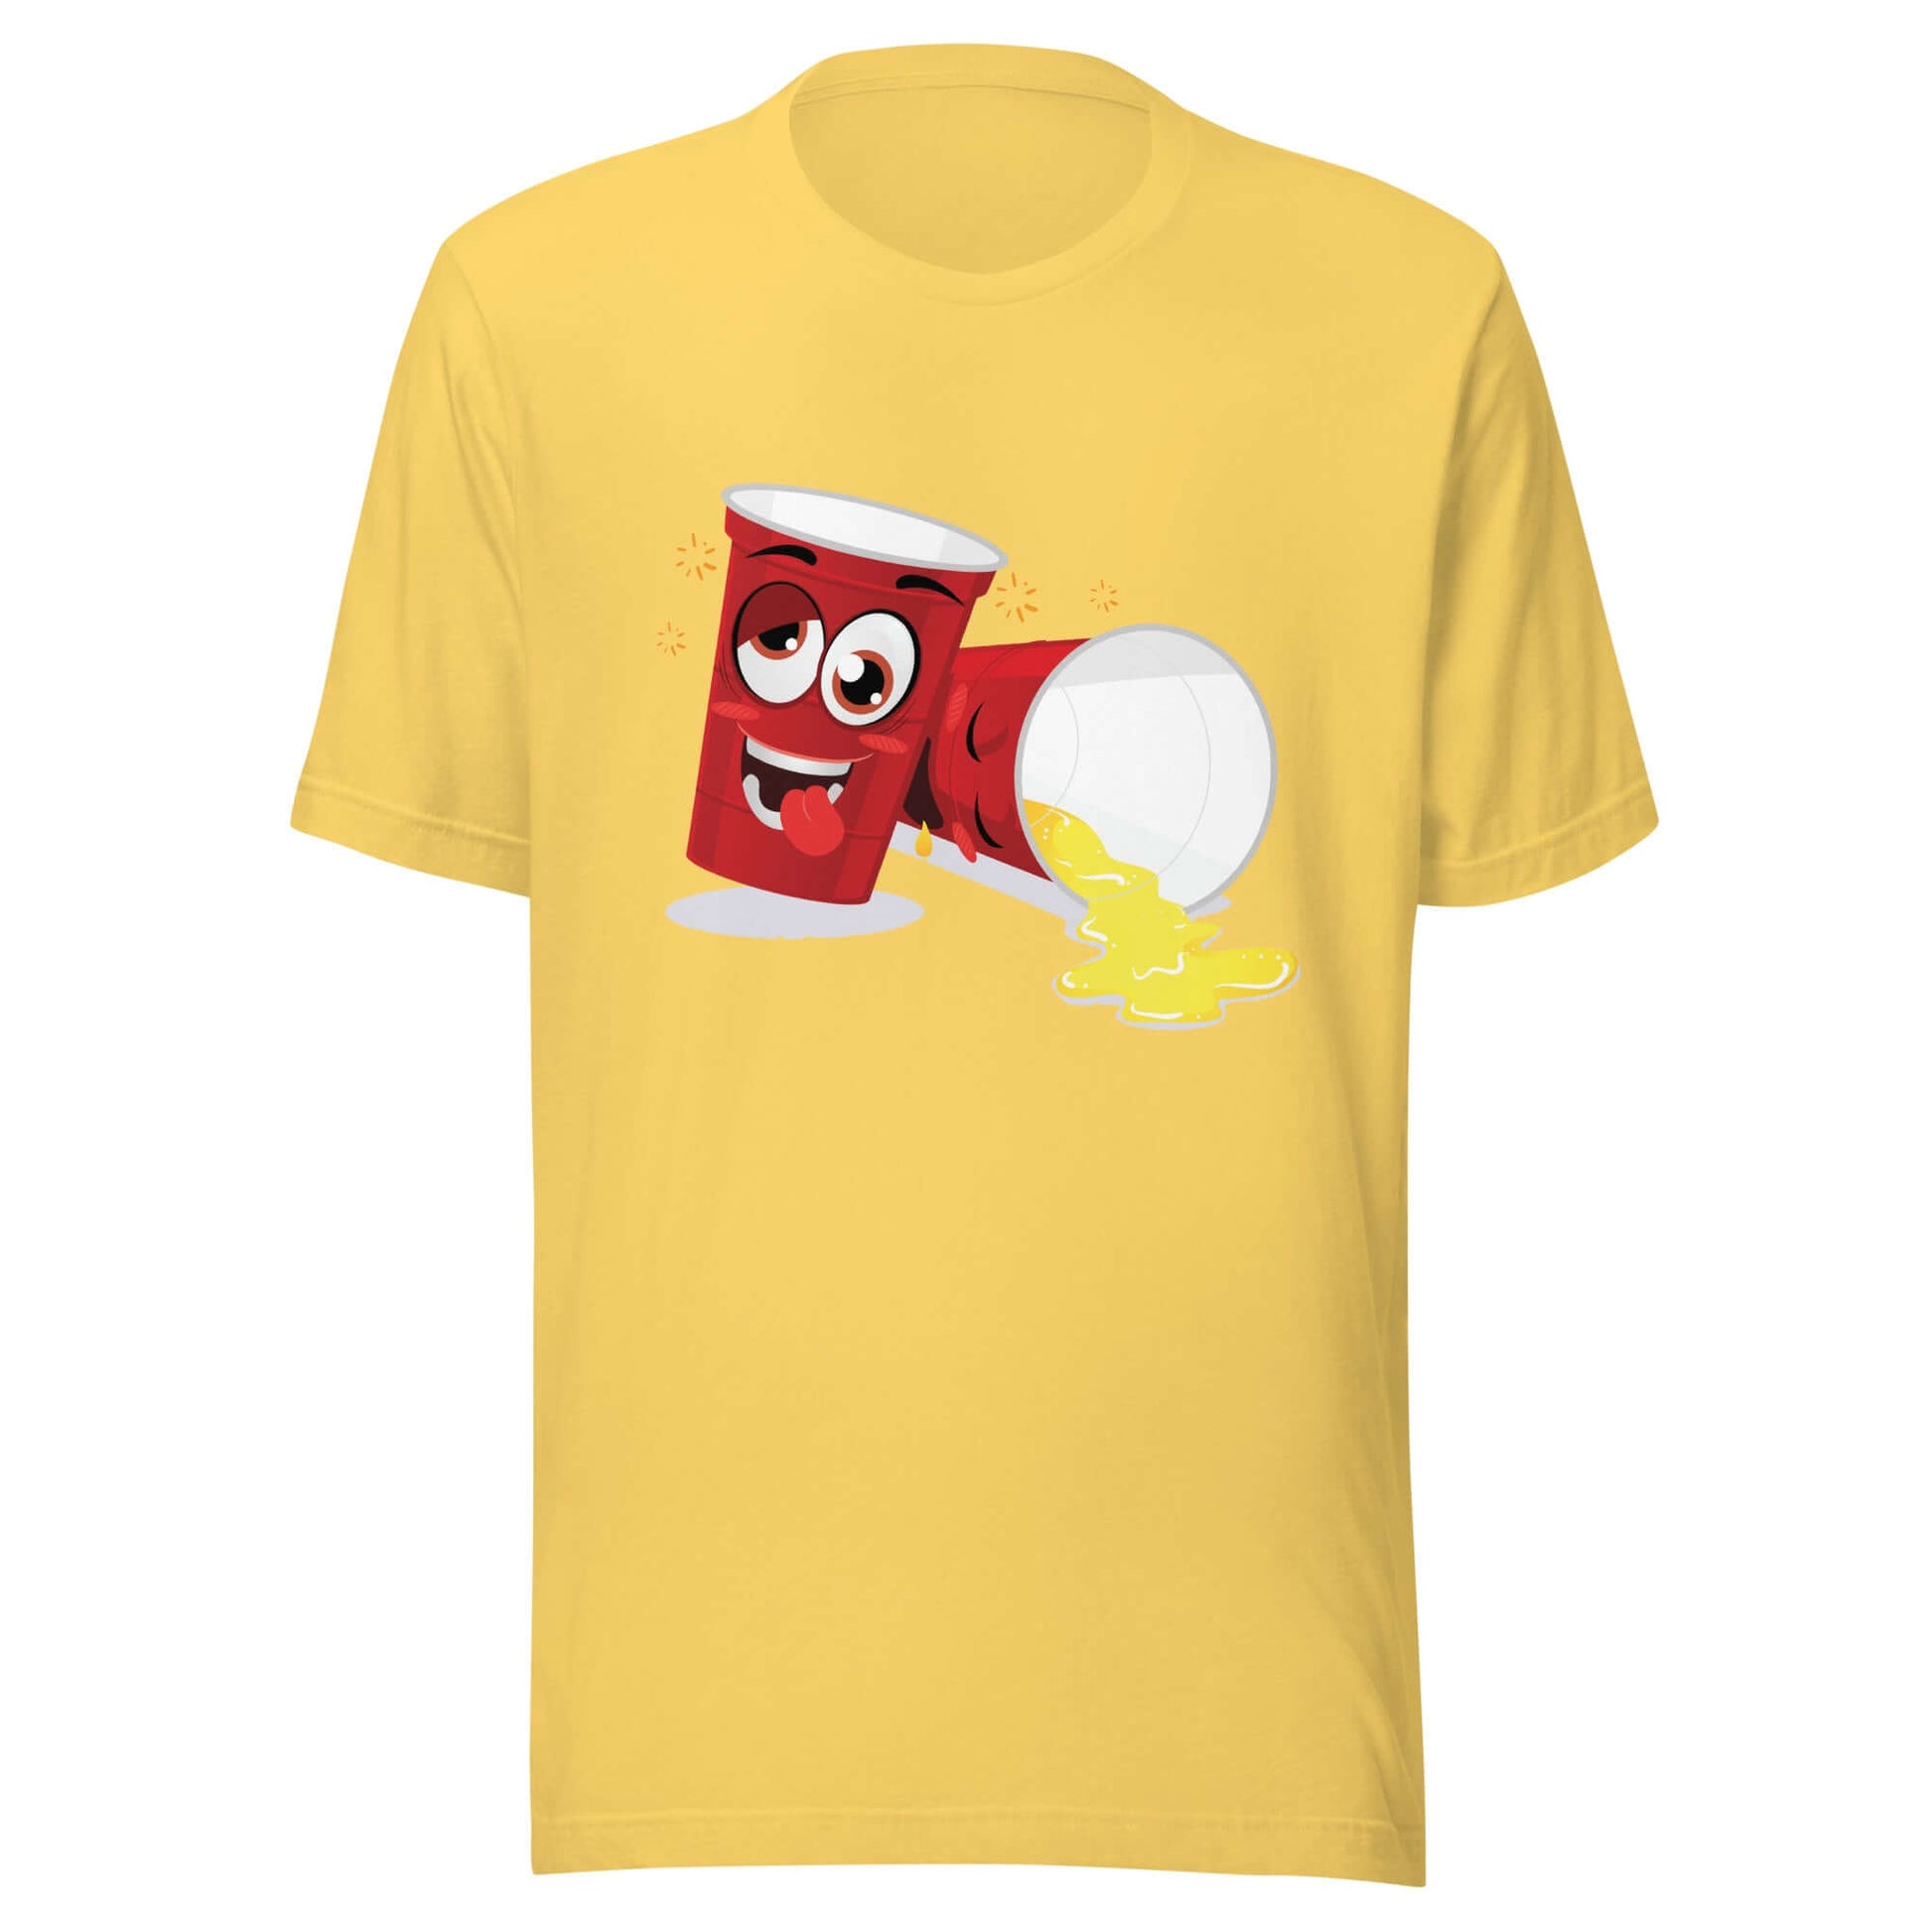 Beer Pong Cups Drunk - Unisex t-shirt - Yellow